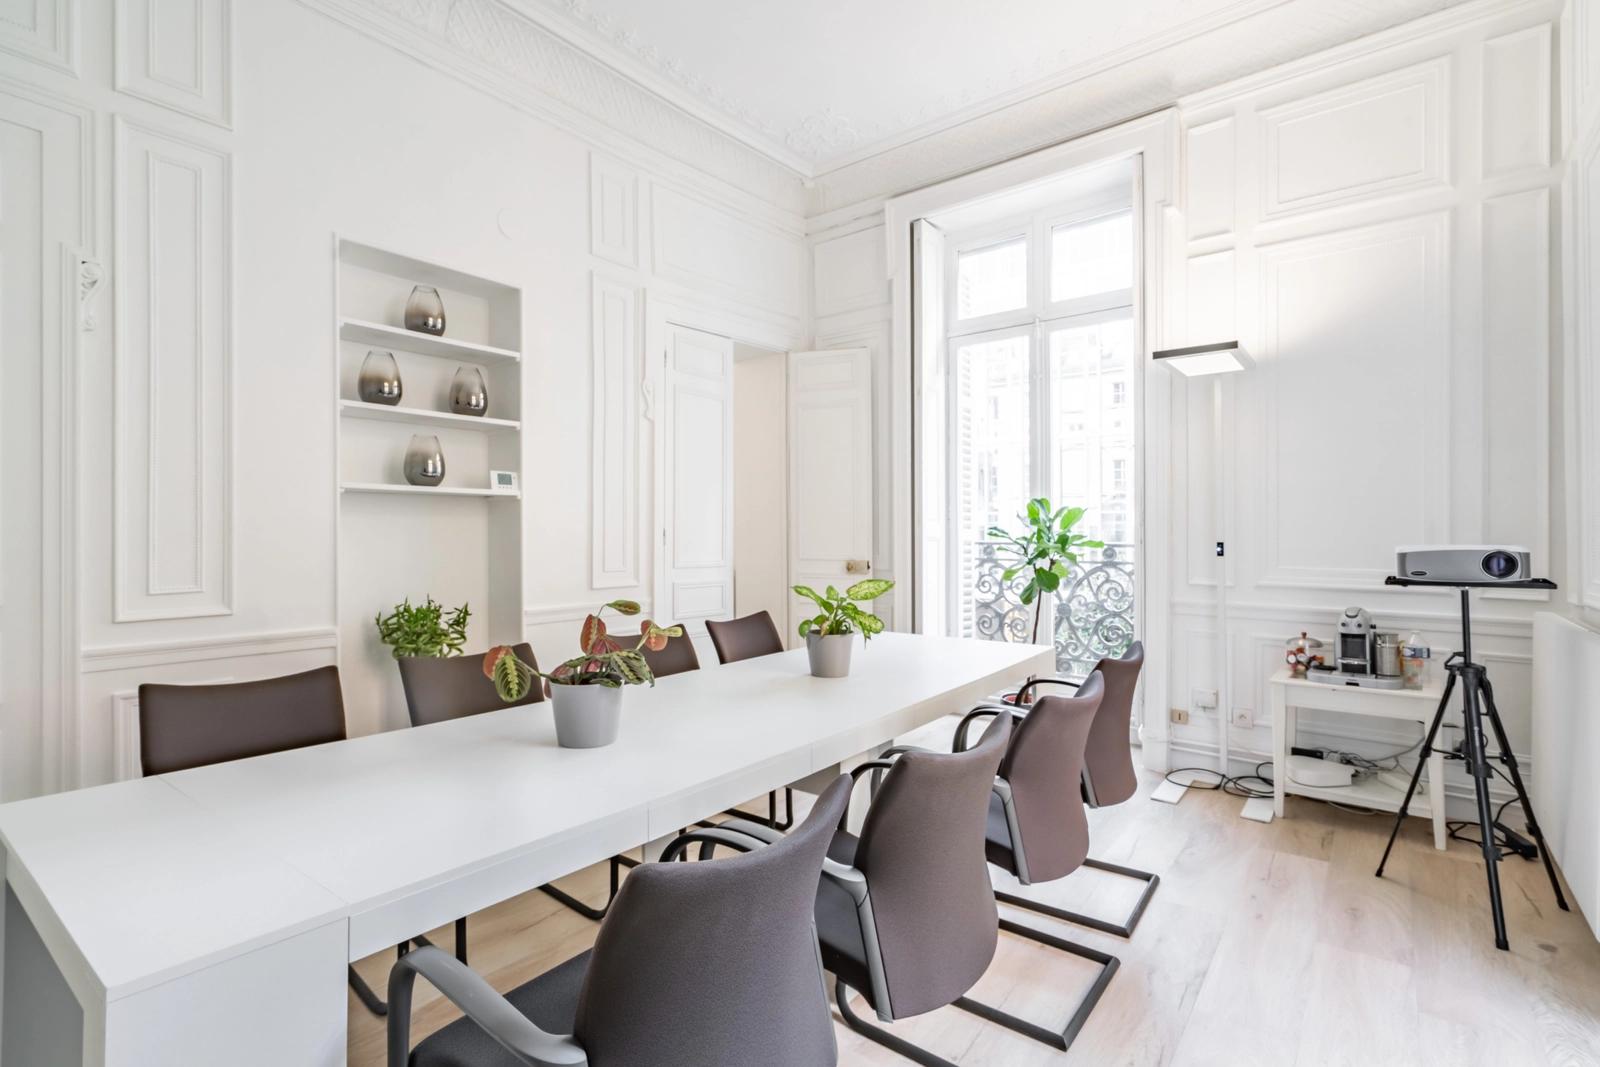 Meeting room in Haussmann-style meeting space - 1